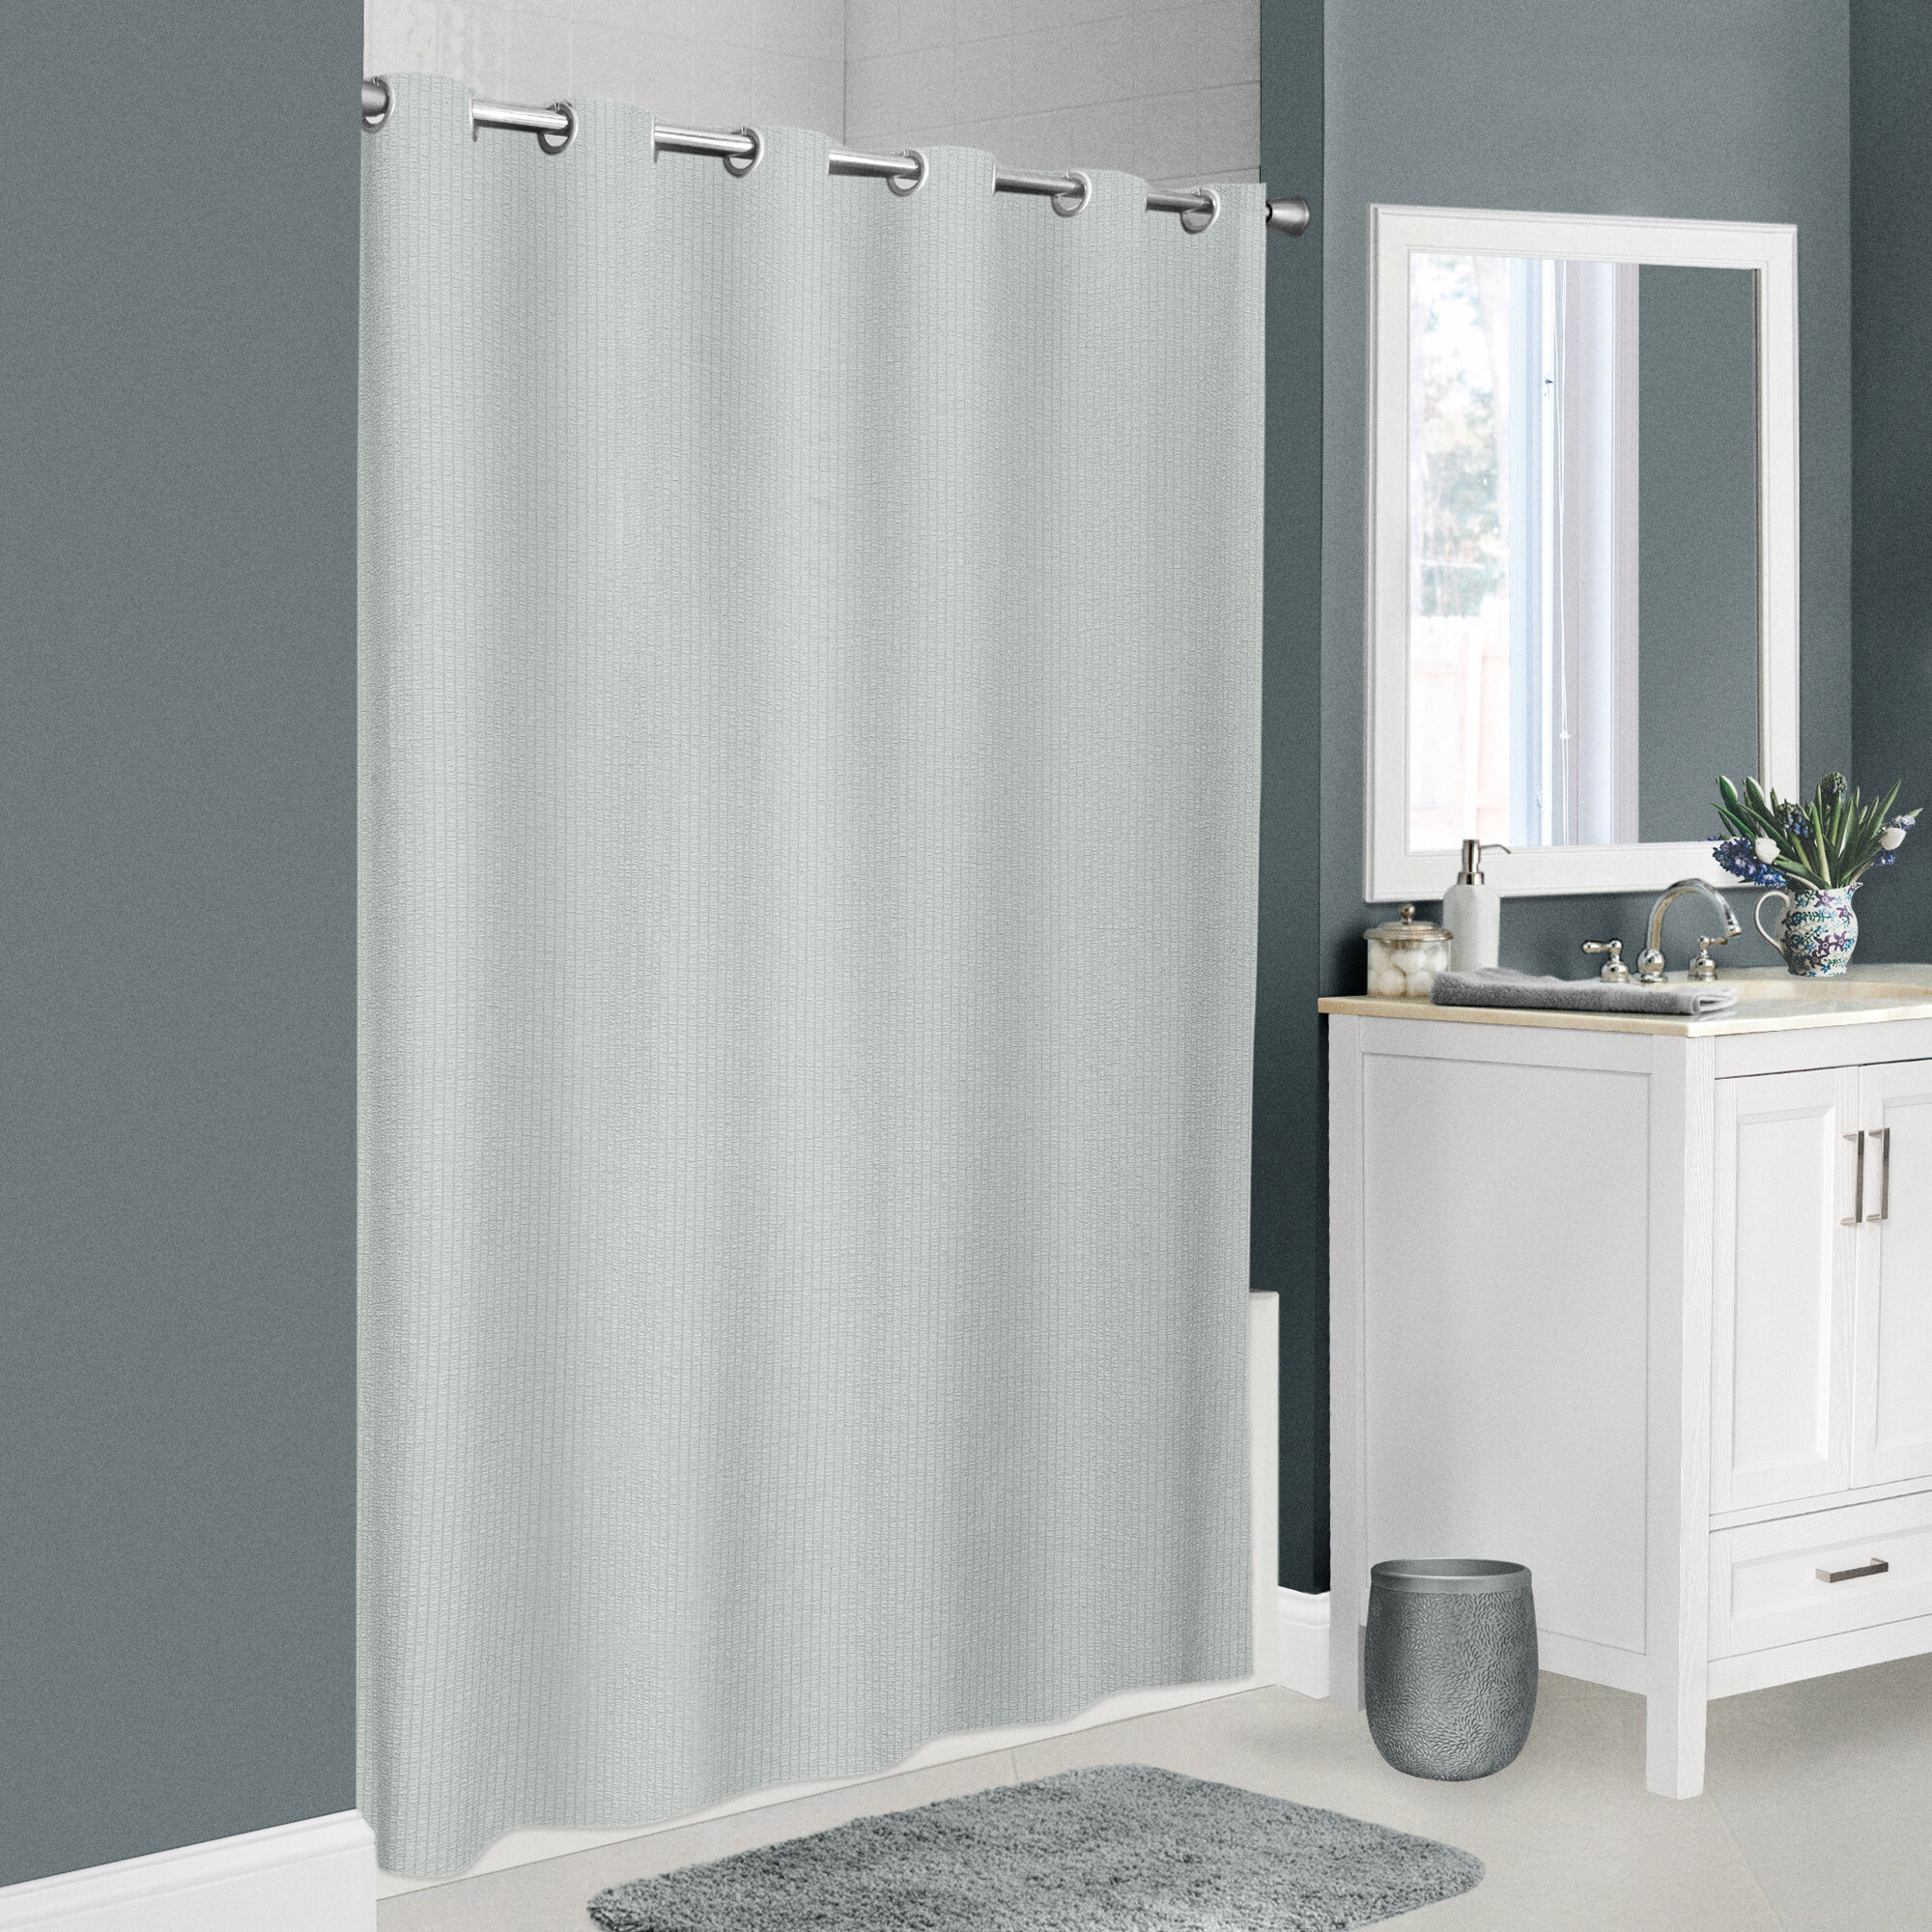 Cameo Hookless Striped Fabric Single Shower Curtain Latitude Run Color: Gray